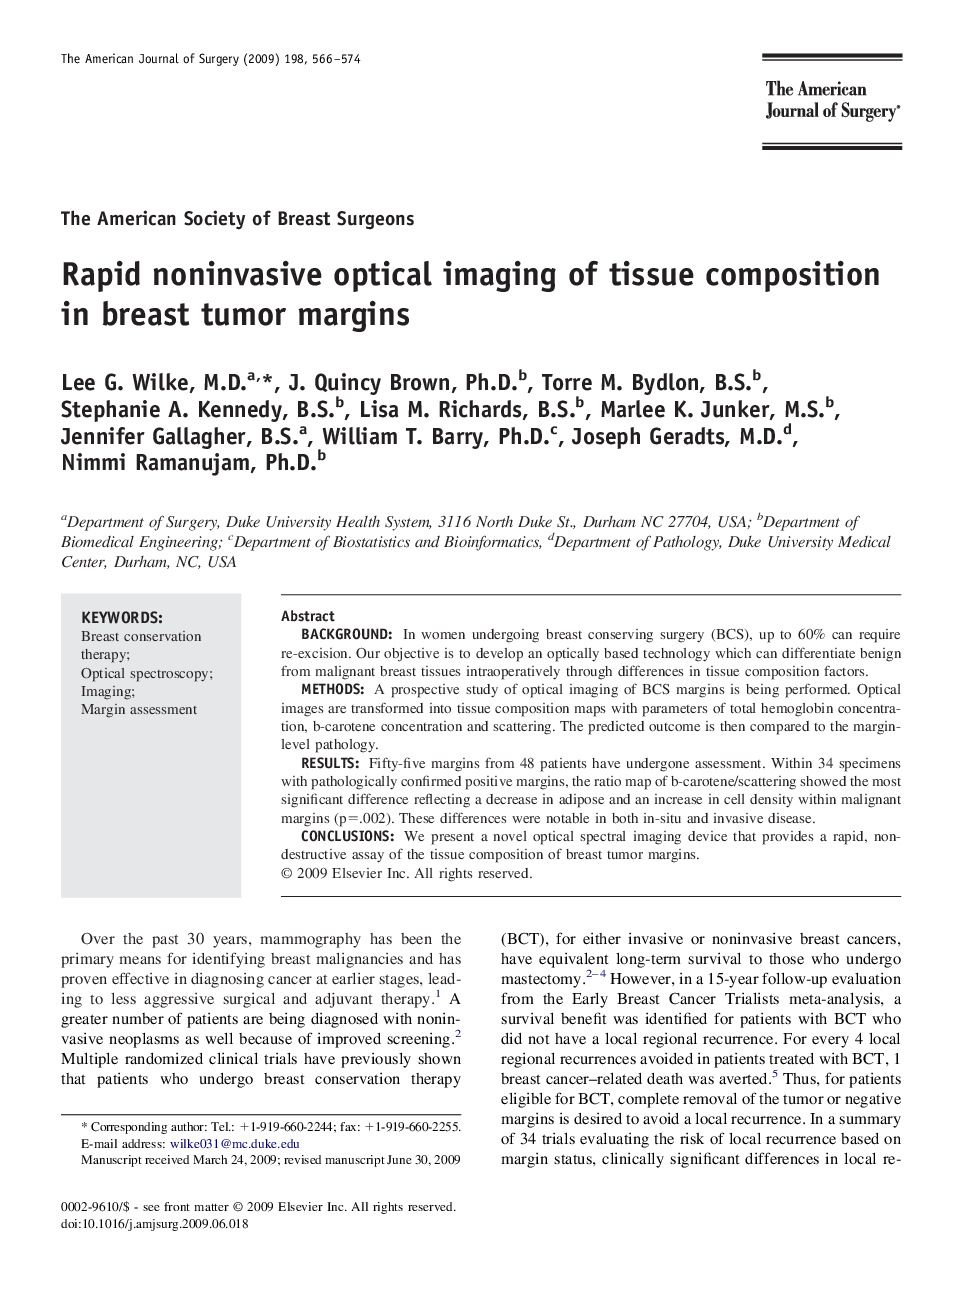 Rapid noninvasive optical imaging of tissue composition in breast tumor margins